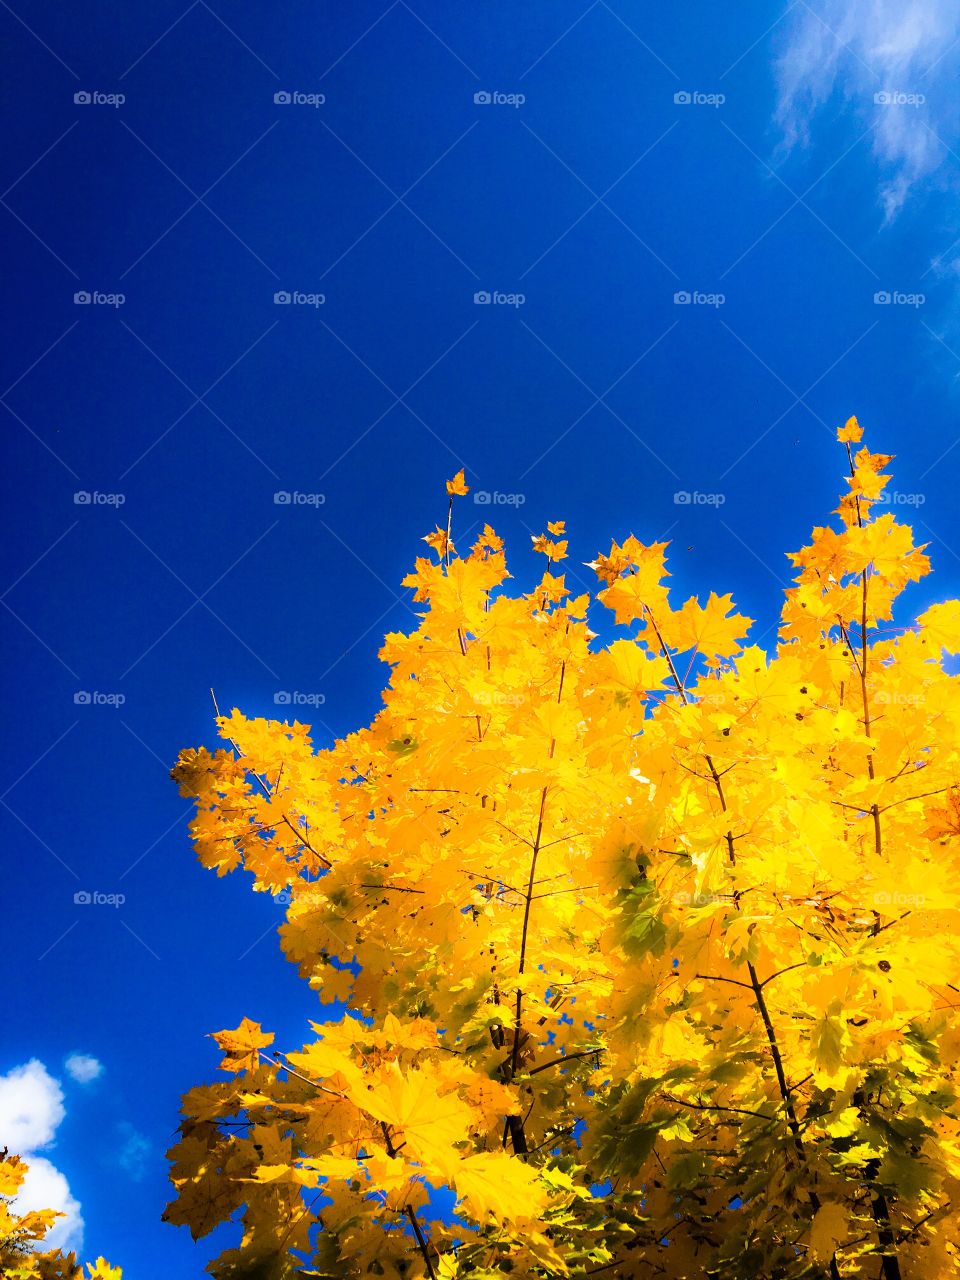 autumn tree and blue sky